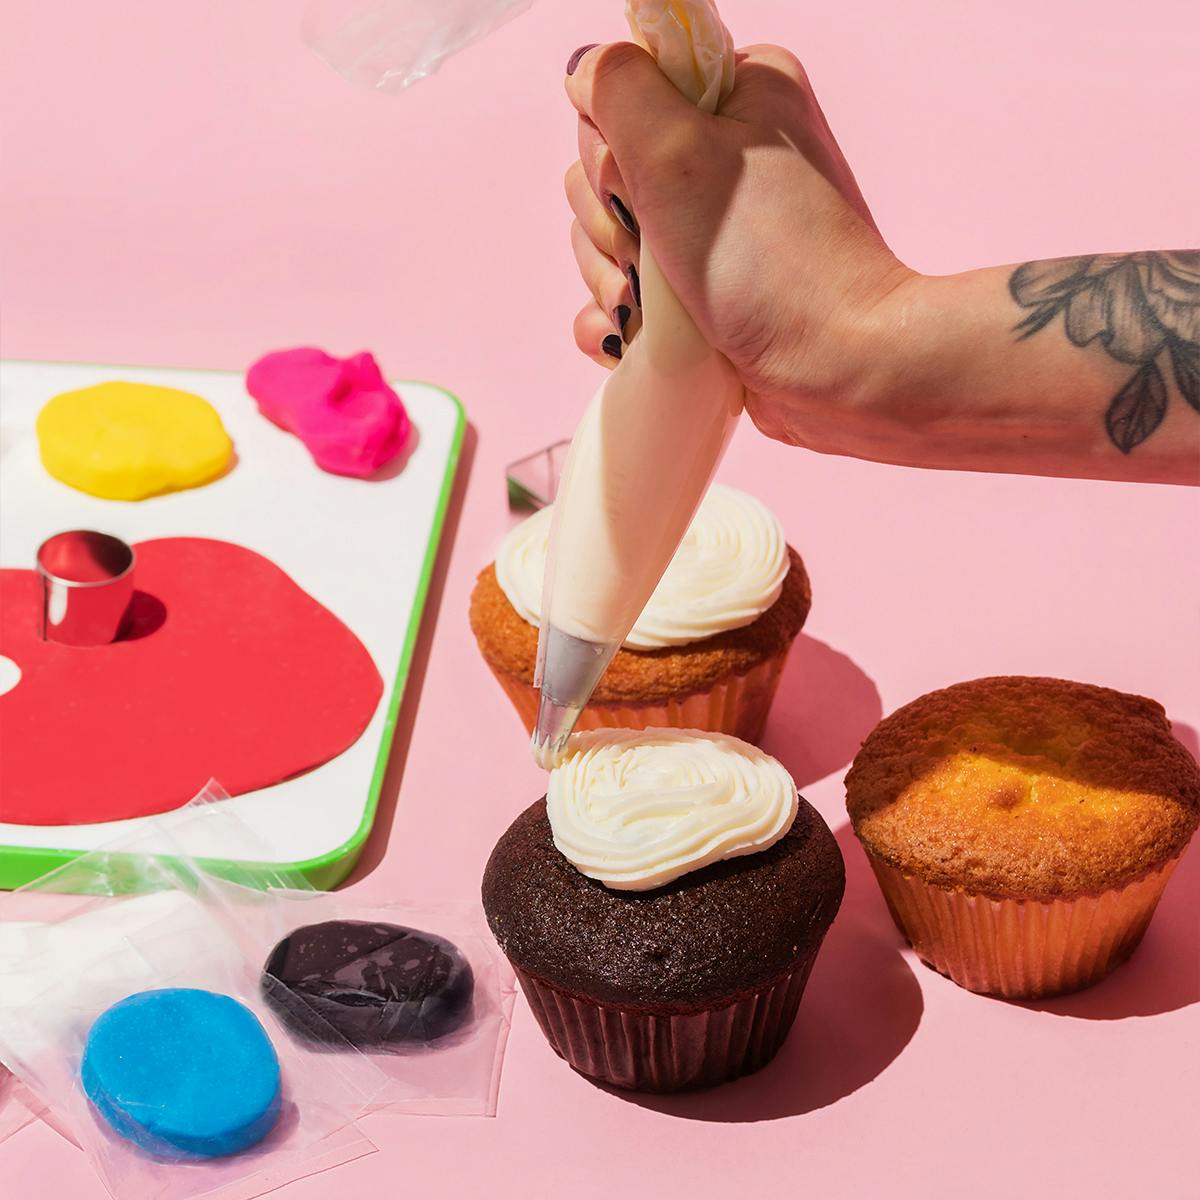 Duff Monster Cupcakes Baking Kit - Duff Goldman x Baketivity Kits for Kids, Teens & Adults with Pre-Measured Ingredients - DIY Cupcake Mix Baking Set